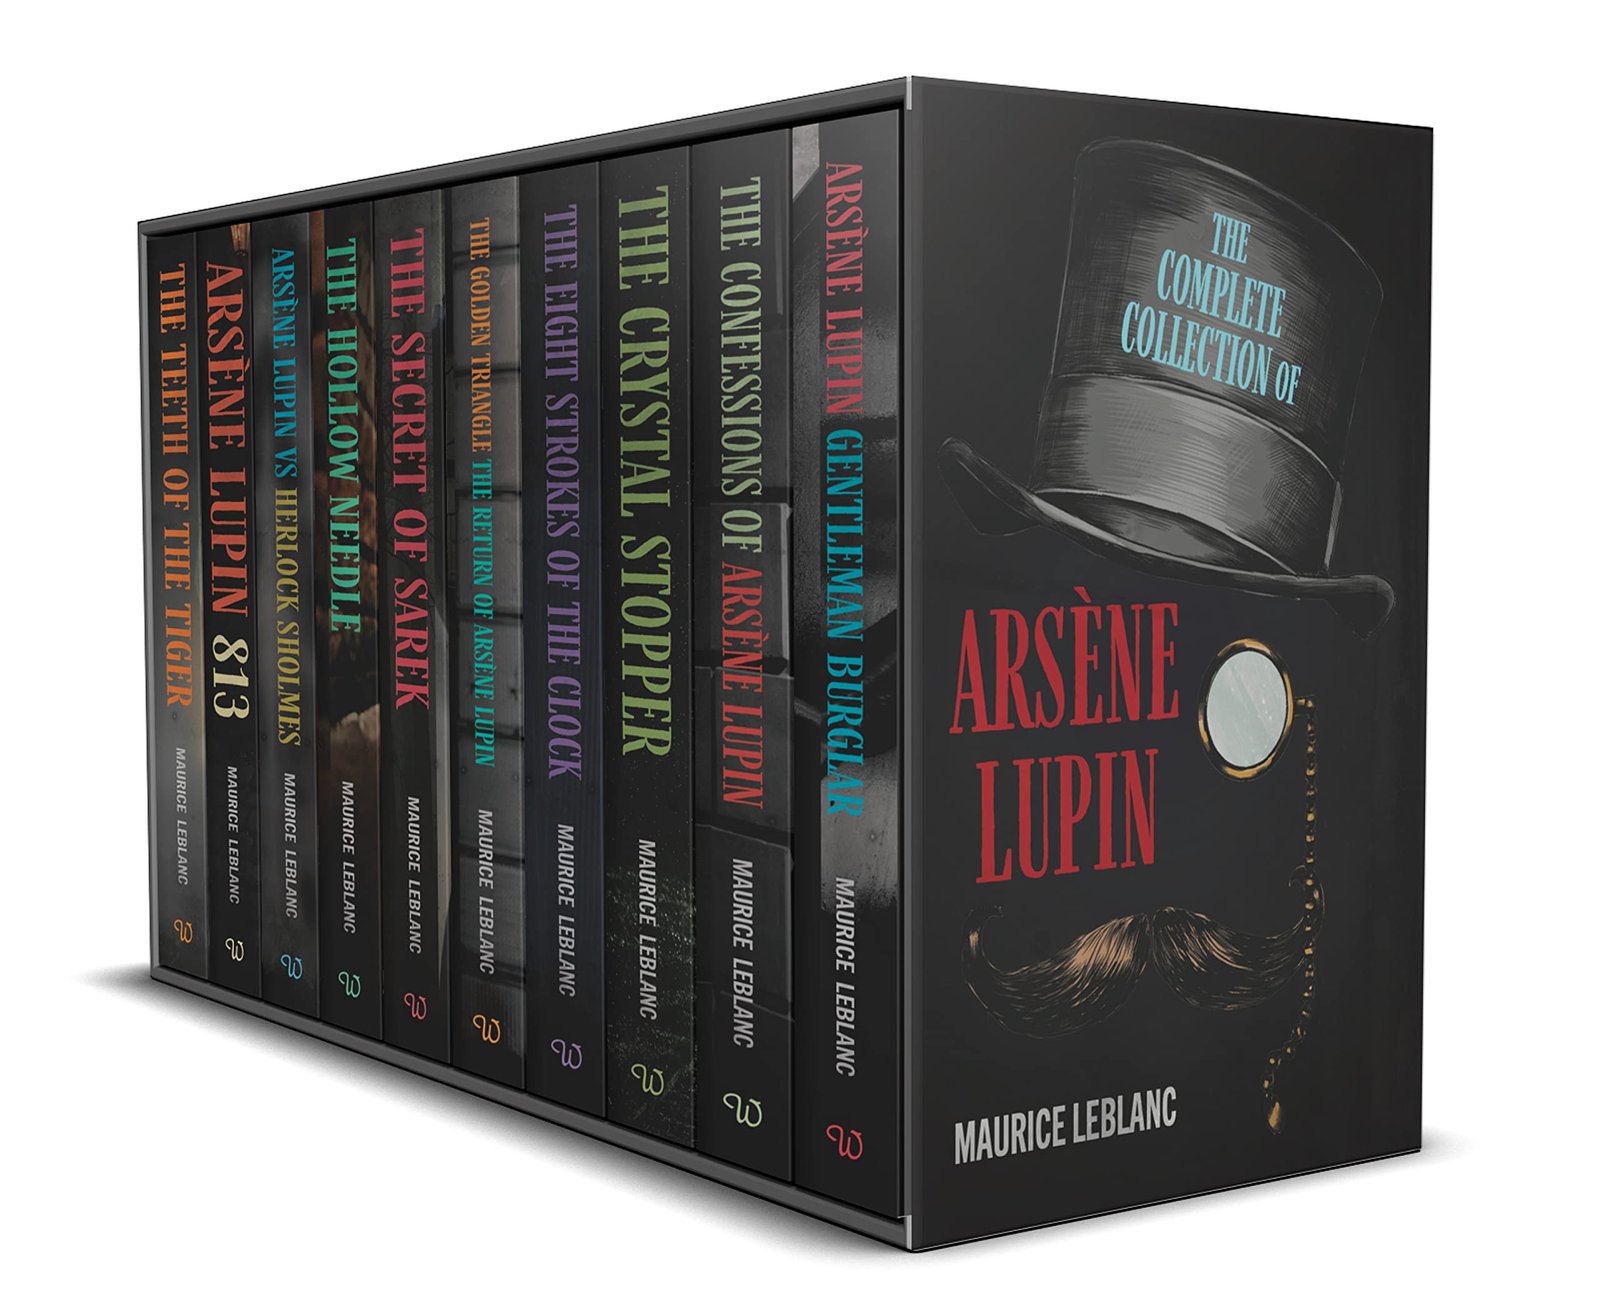 Arsene Lupin Books